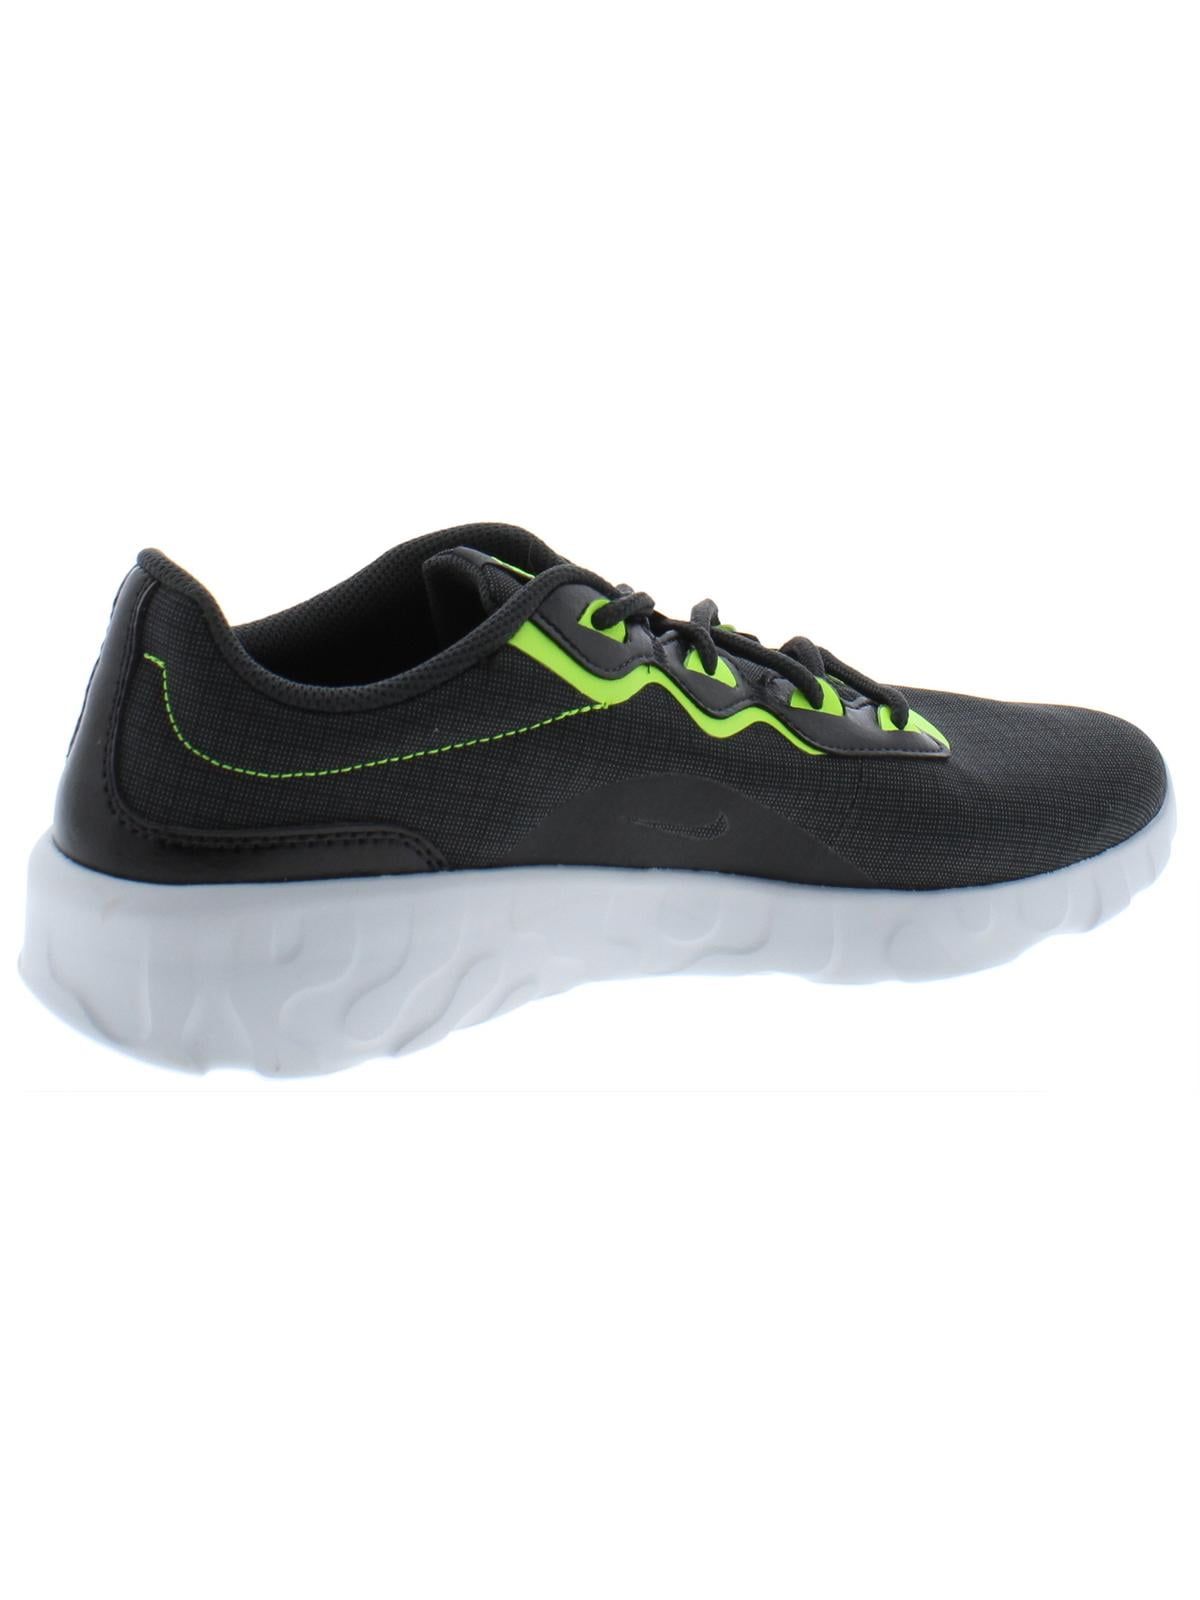 Cusco Sostener lo mismo Nike Explore Strada Black/Volt-Anthracite CD7093-006 Men's - Walmart.com